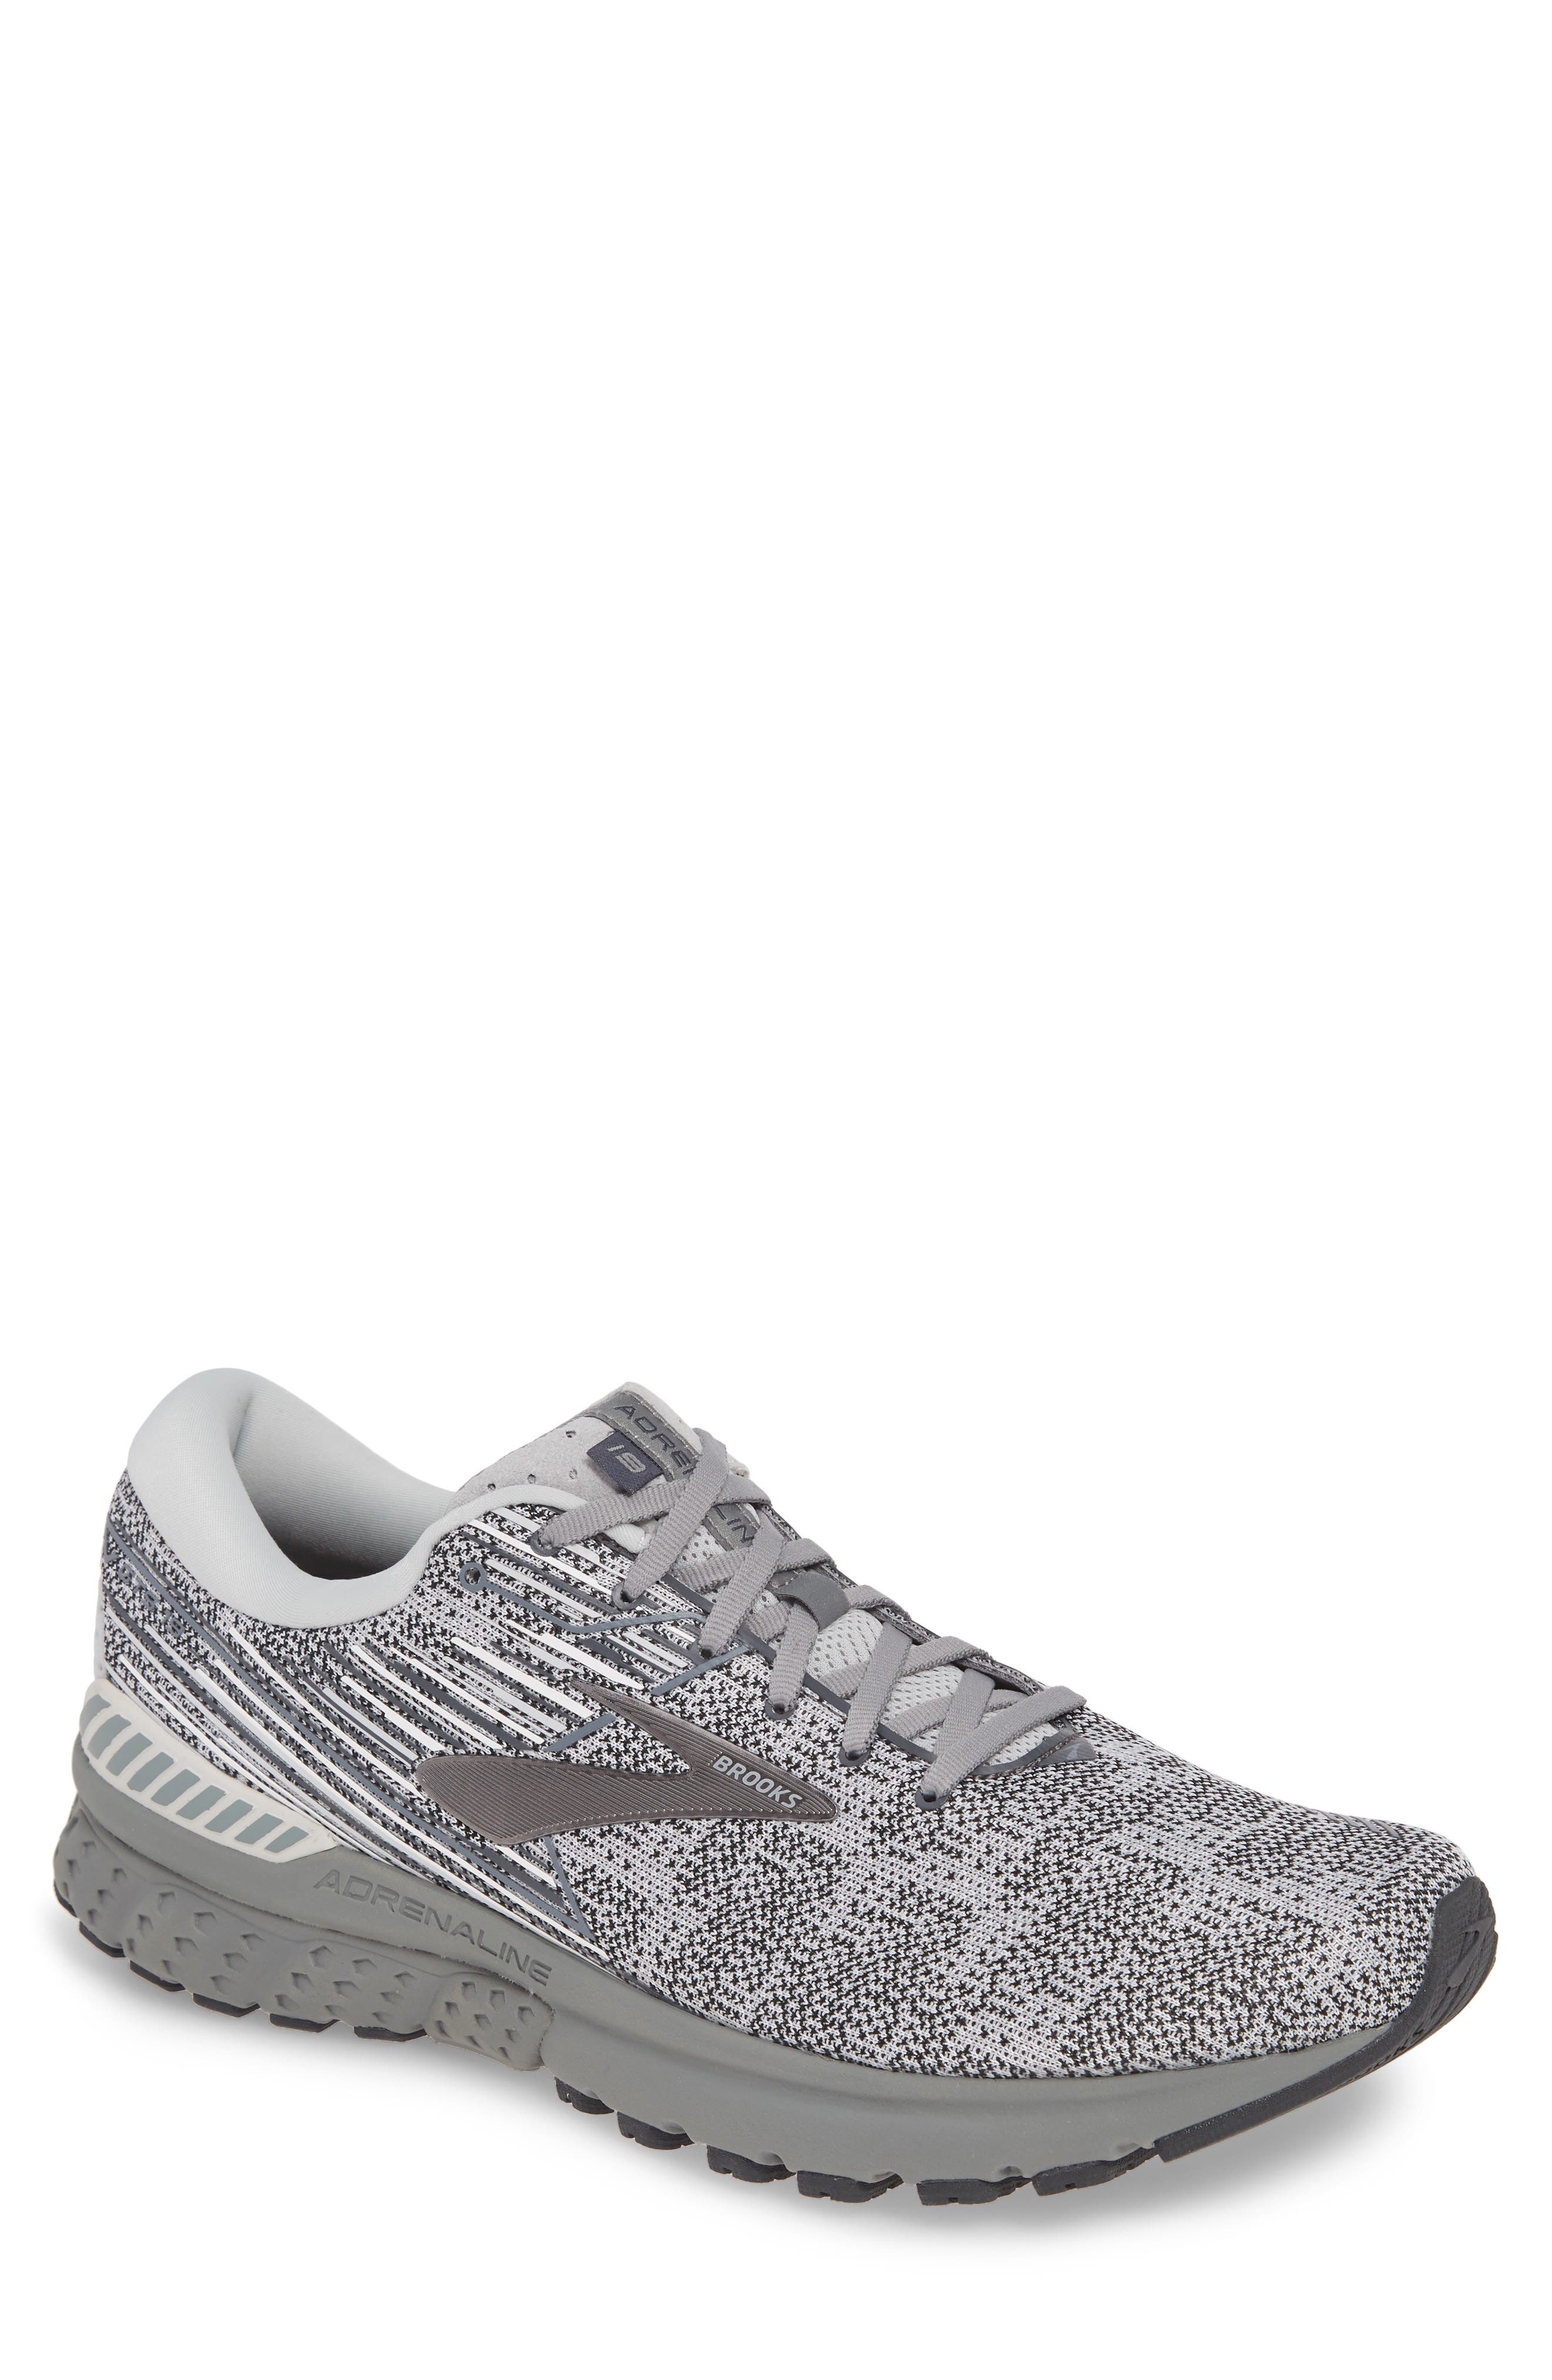 Brooks Adrenaline Gts 19 Running Sneaker In Grey/white/ebony